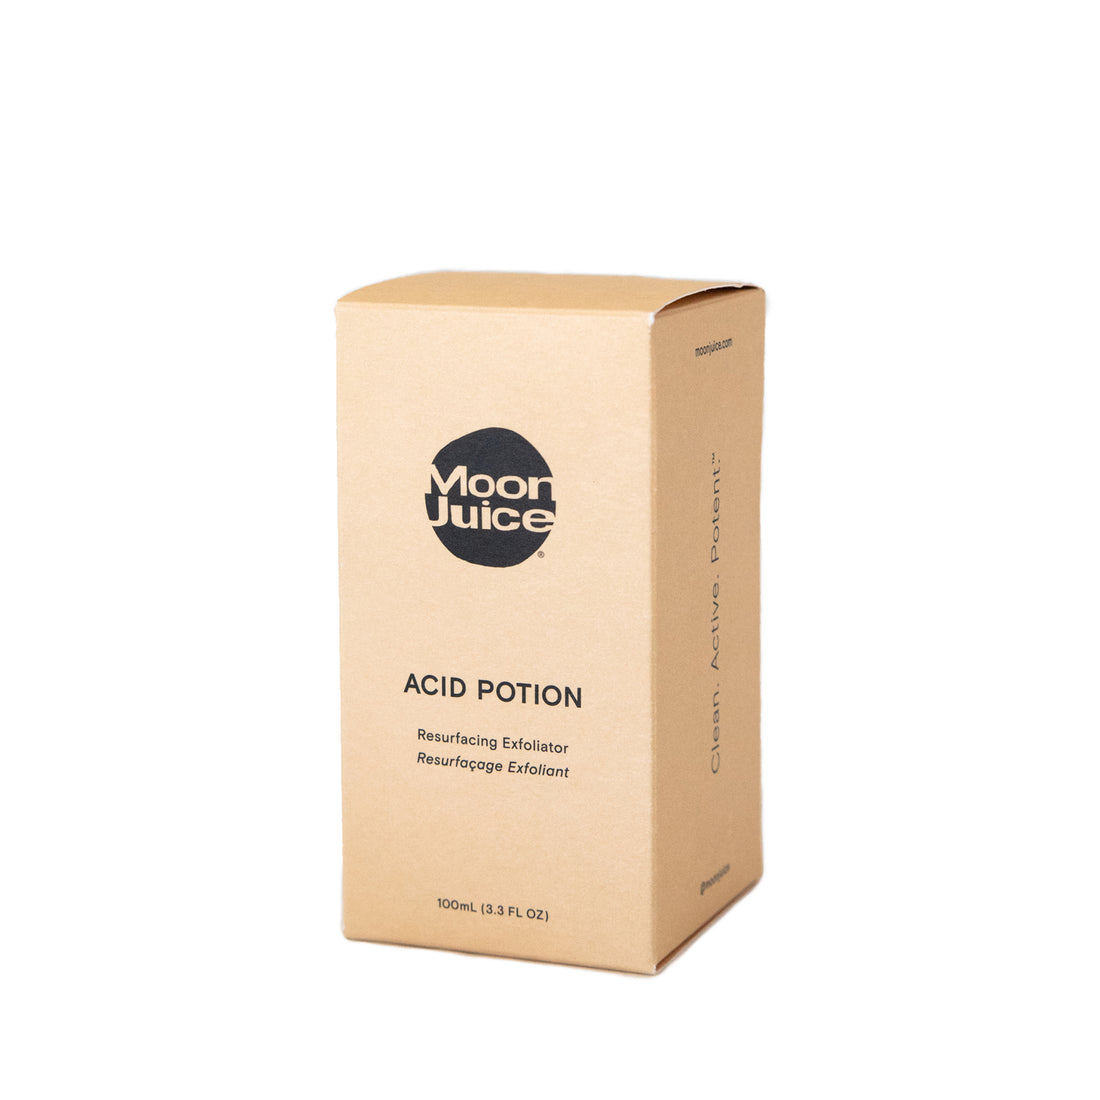 Acid Potion Resurfacing Exfoliator